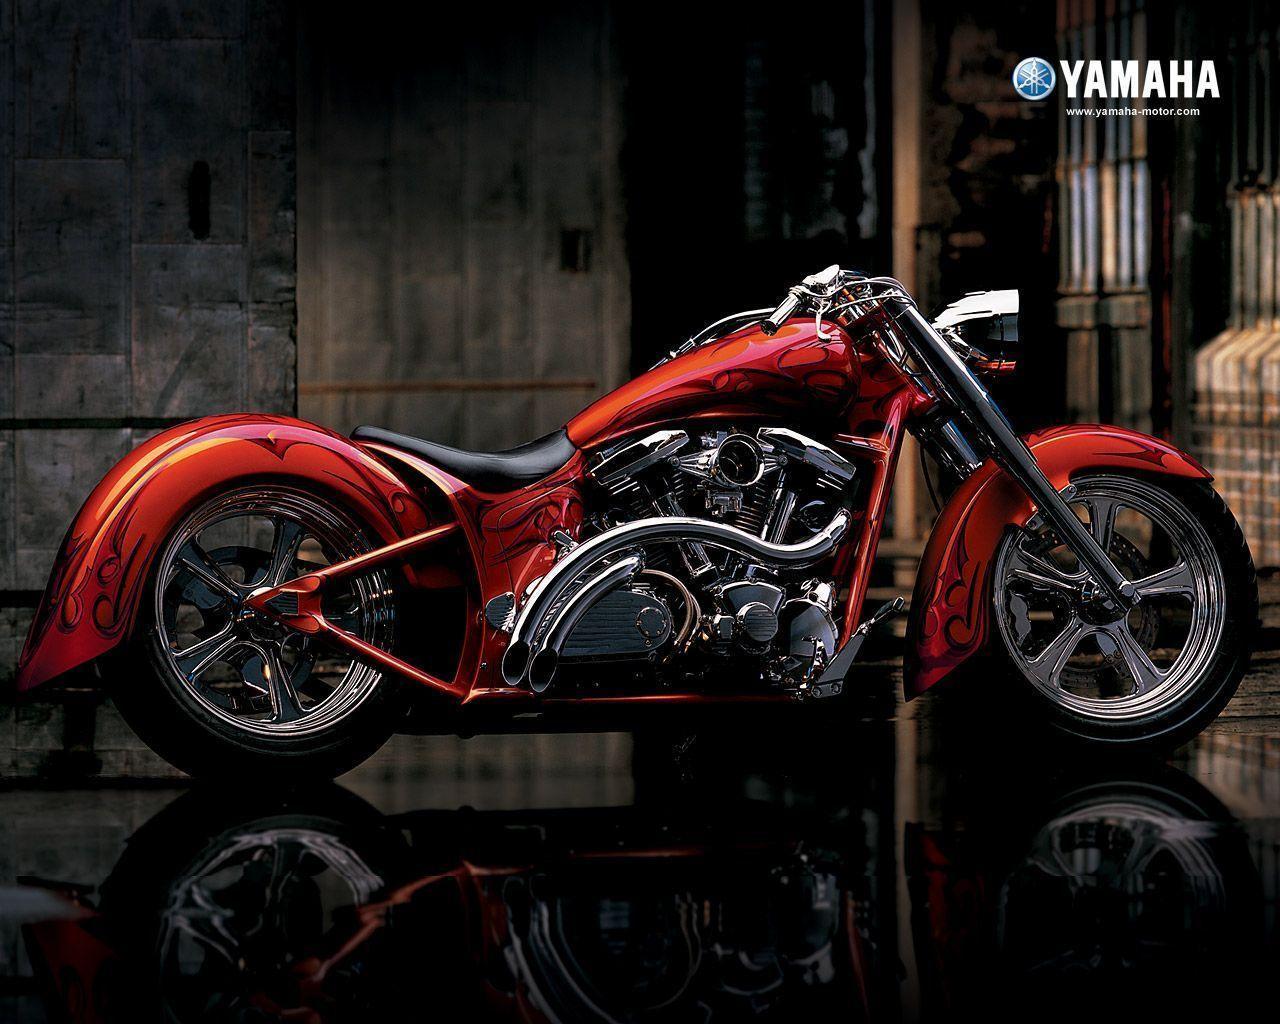 Motorcycle: Mesmerizing Yamaha Motorcycle Image Wallpaper